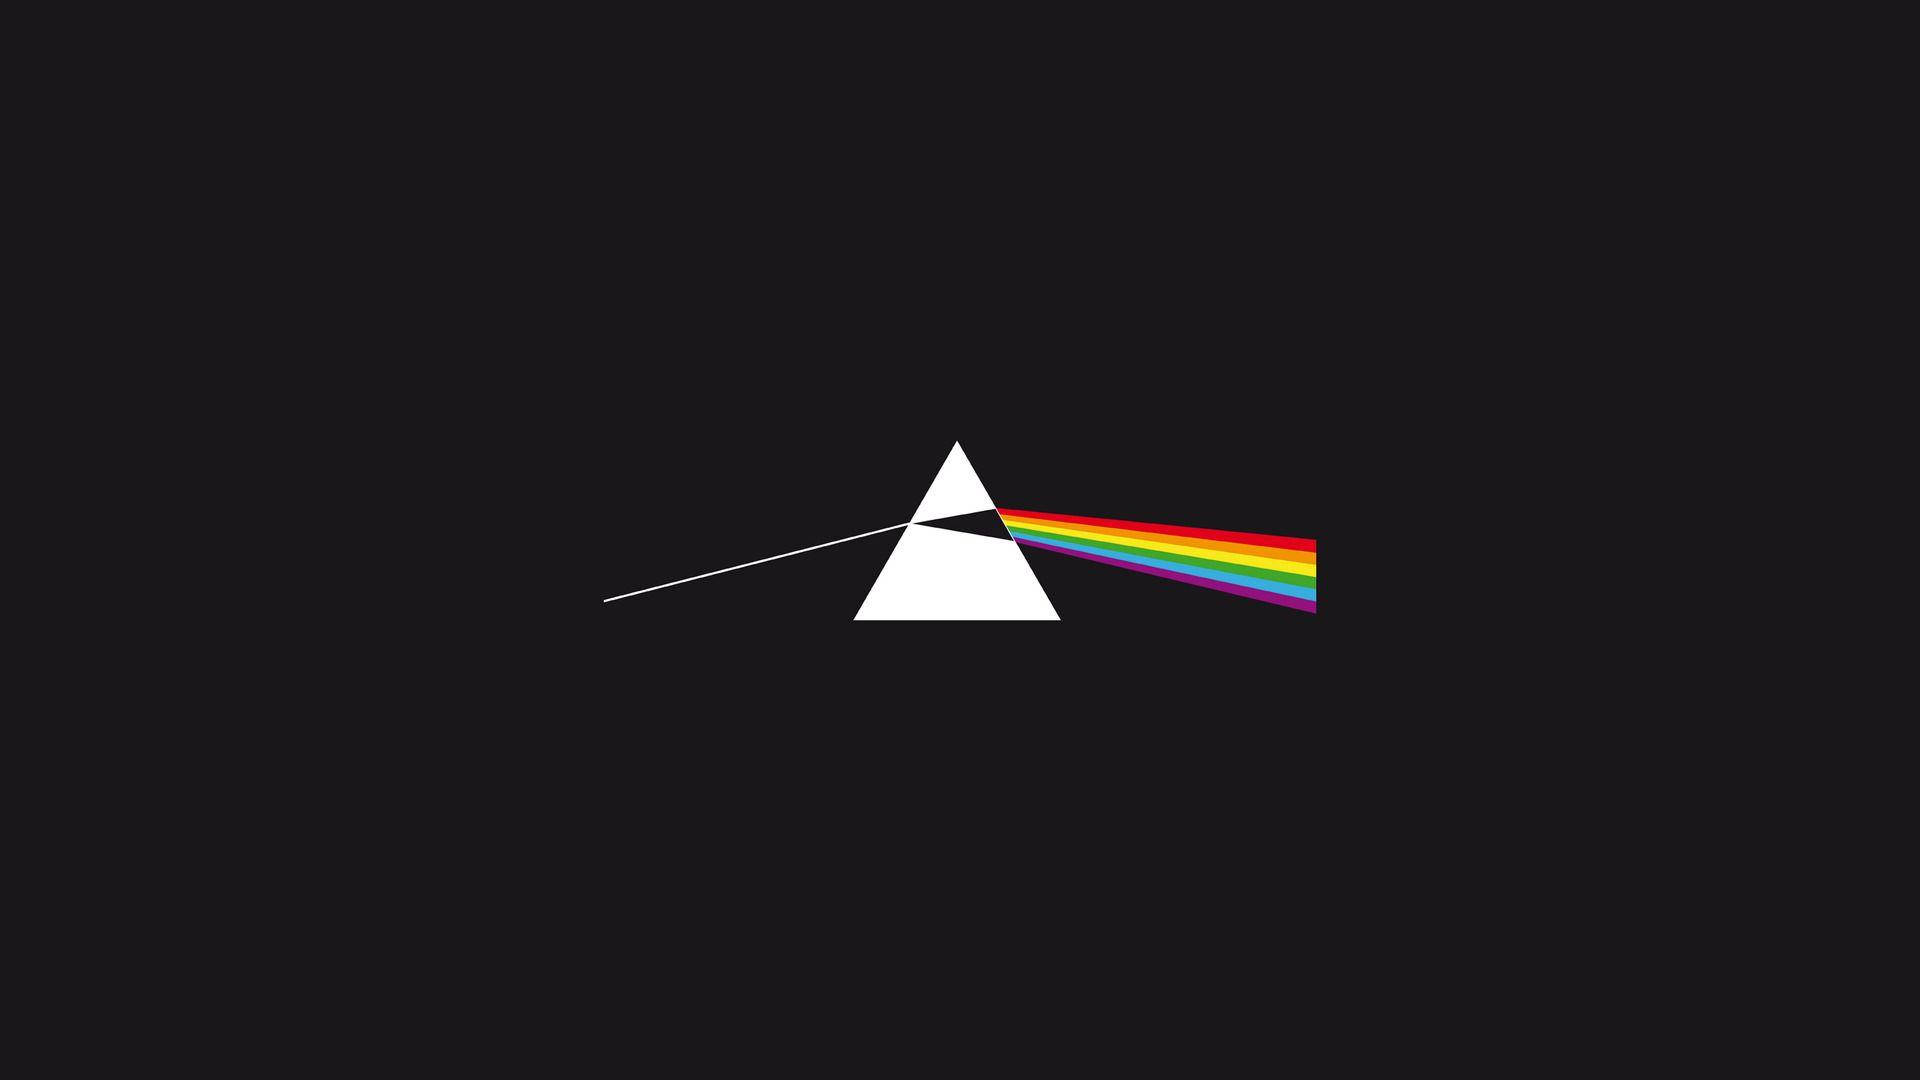 Minimalist Desktop Pink Floyd Album